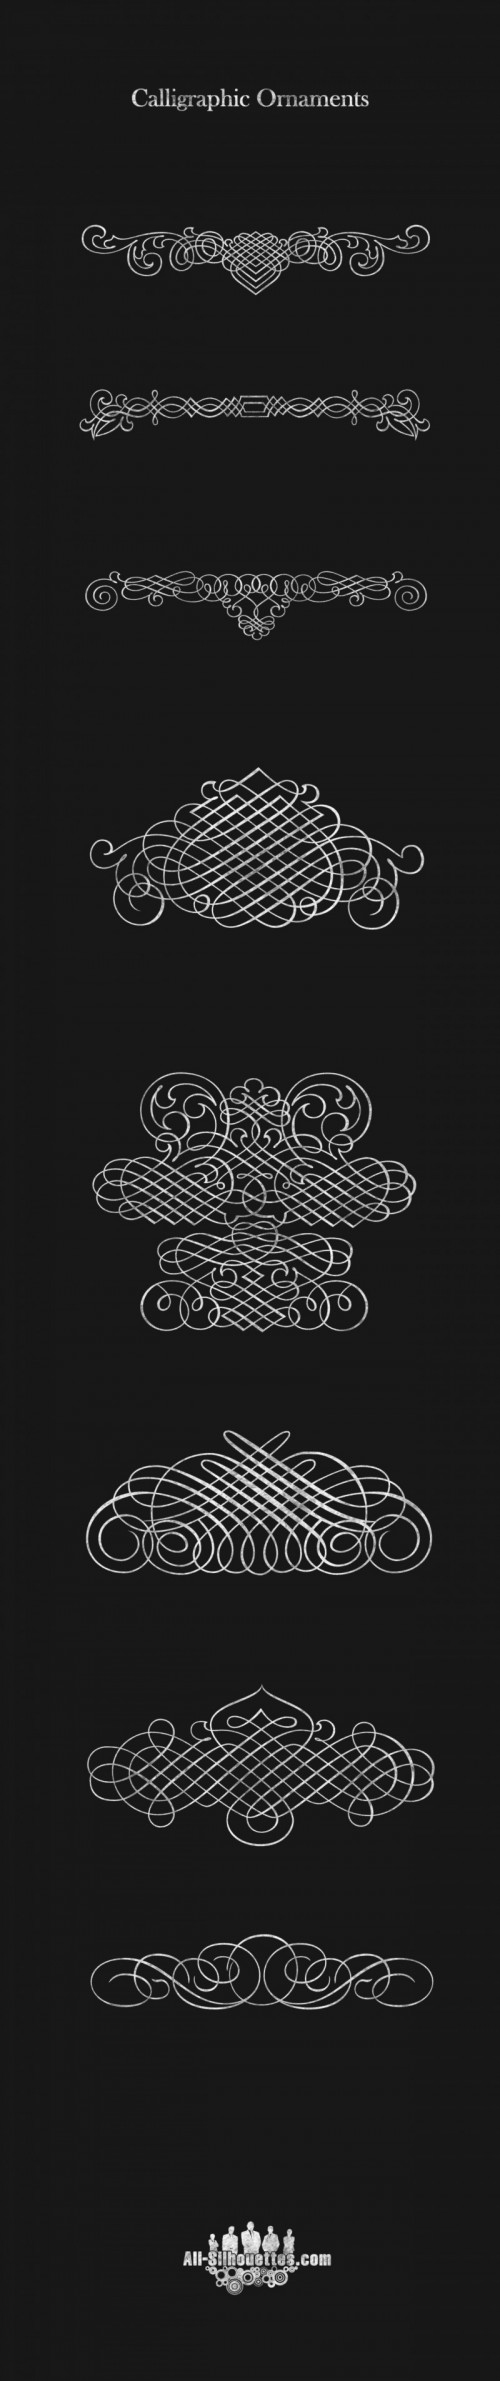 calligraphic-ornaments-All-Silhouettes-02-500x2381